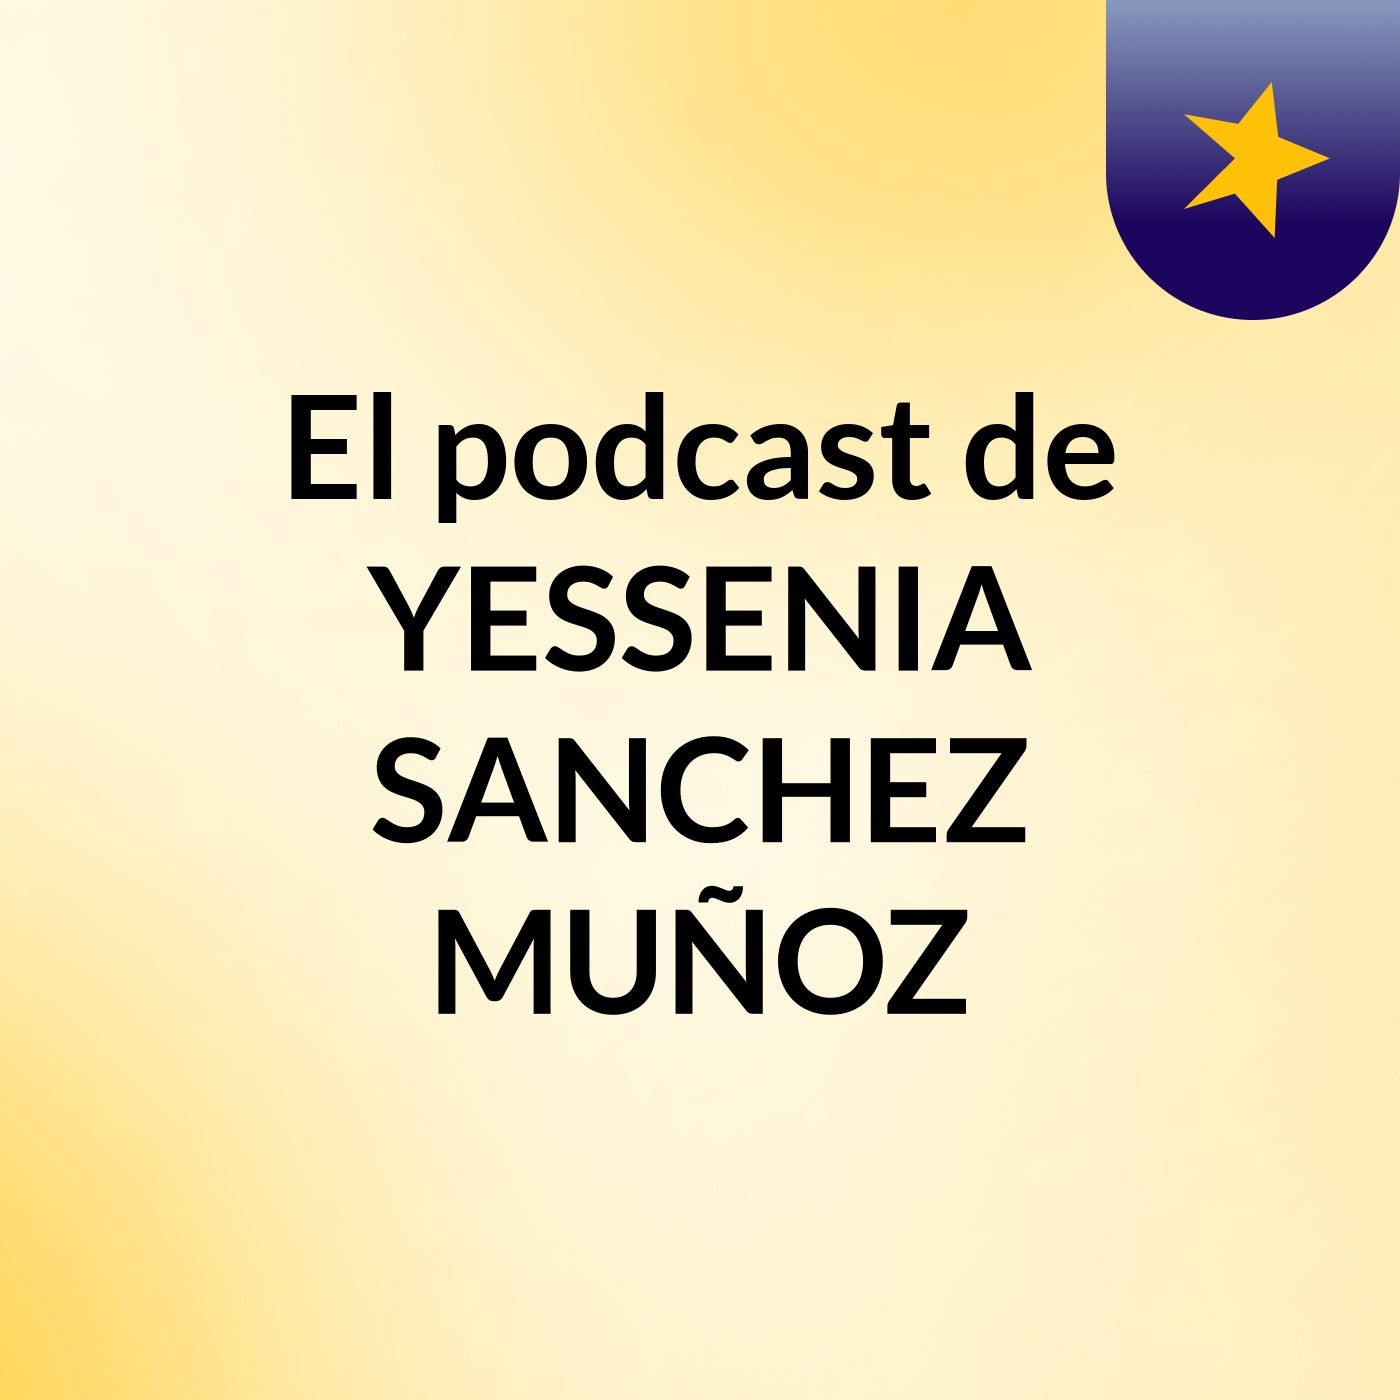 El podcast de YESSENIA SANCHEZ MUÑOZ